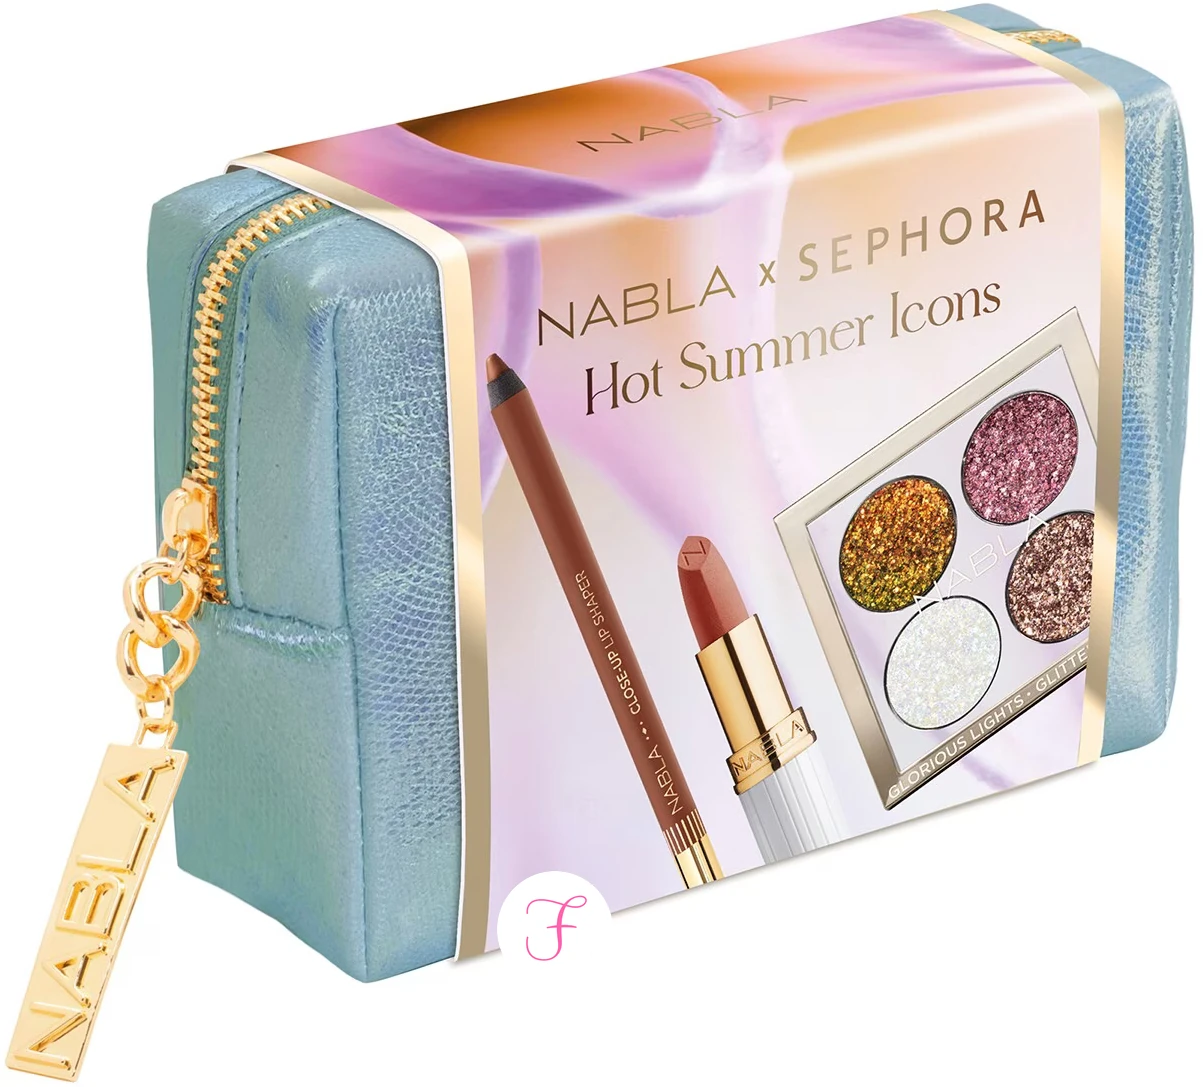 nabla-x-sephora-hot-summer-icons